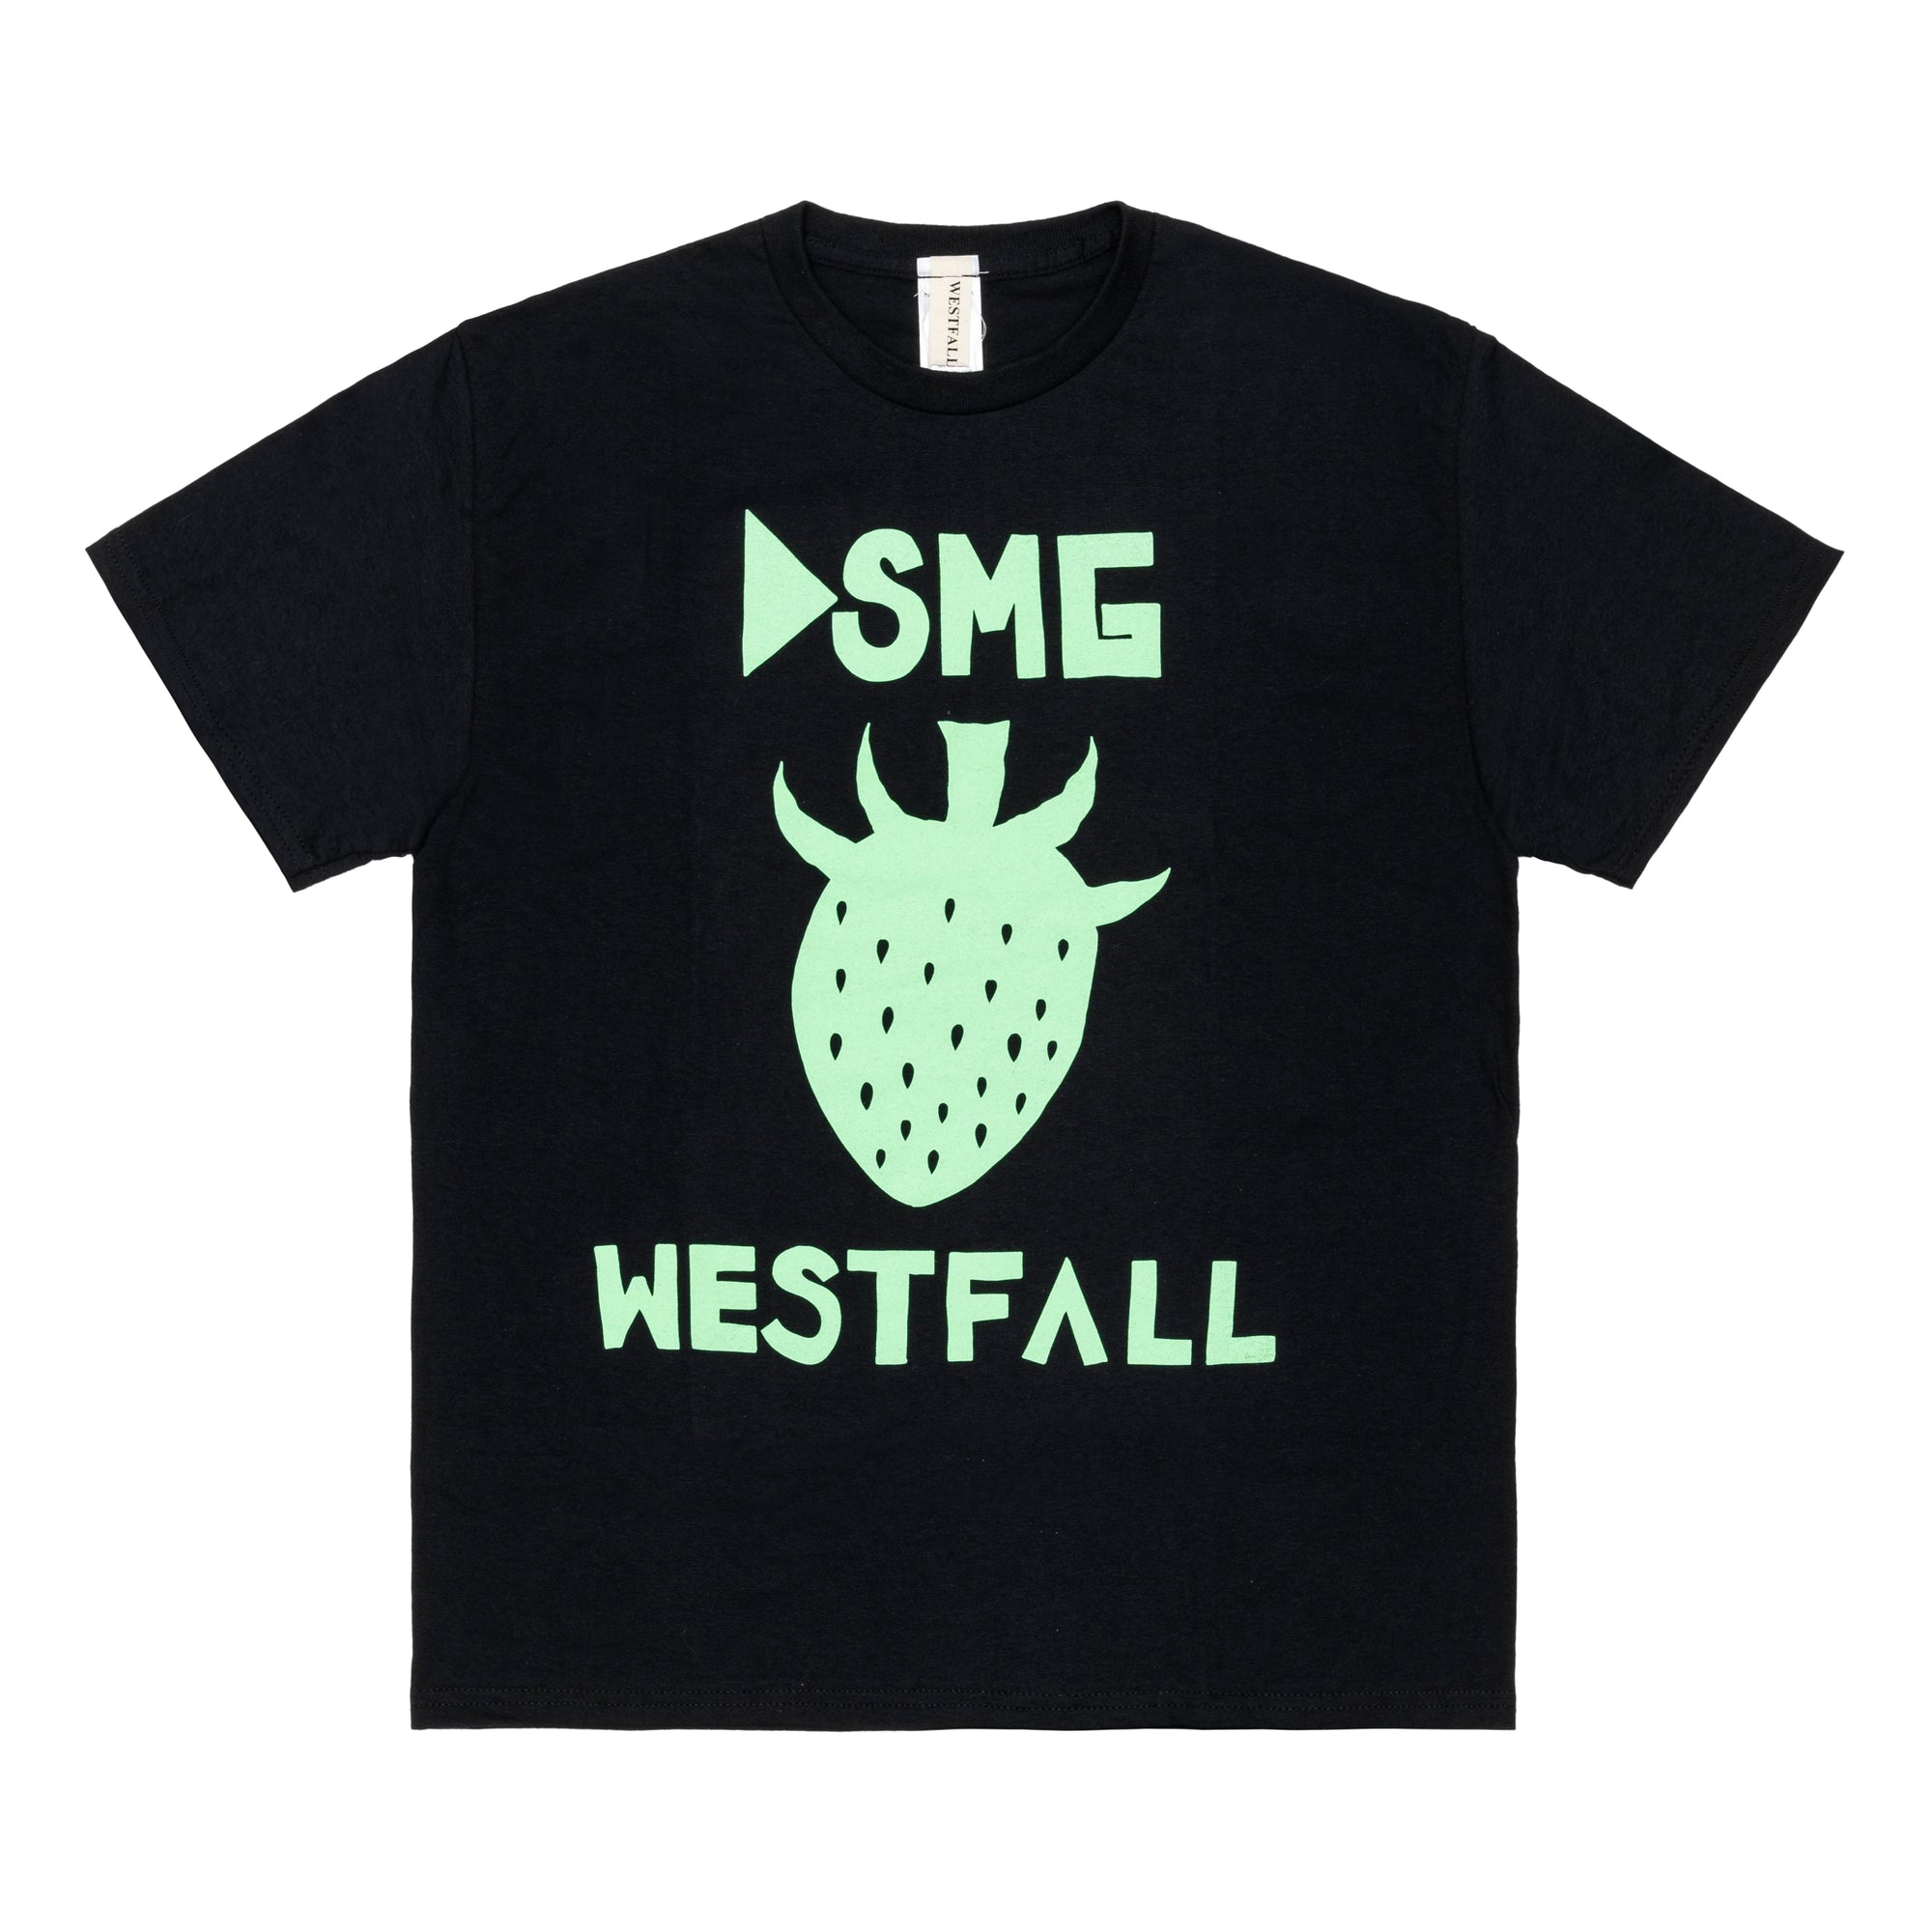 WESTFALL - DSMG Strawberry Westfall - (Black) view 1